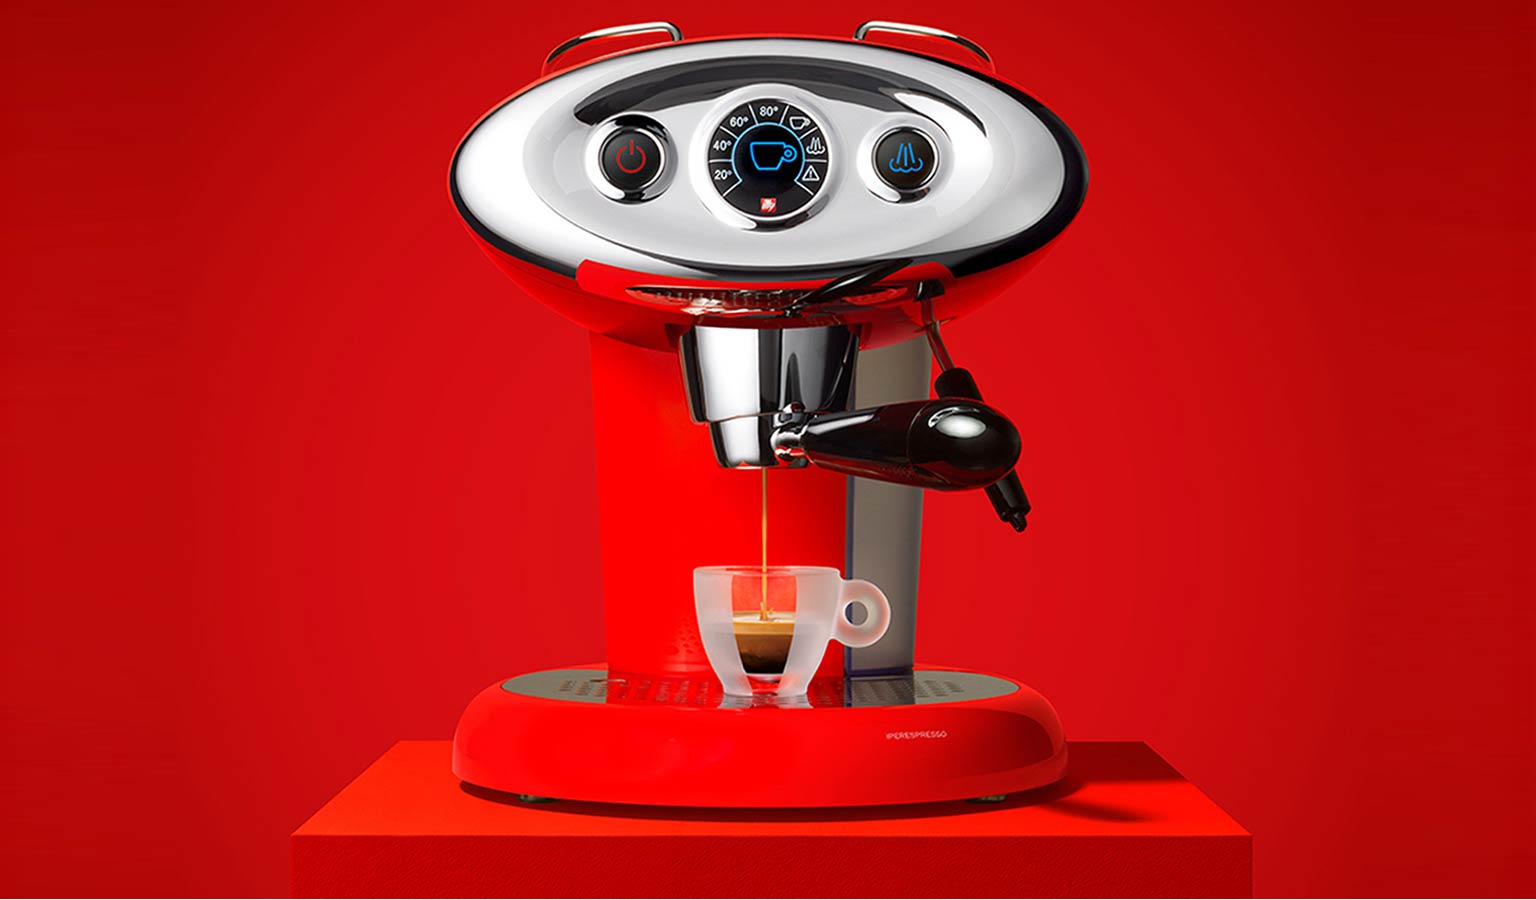 Illy Coffee Machine Iperespresso X7.1 a Capsules Express /& Cappuccino 220v